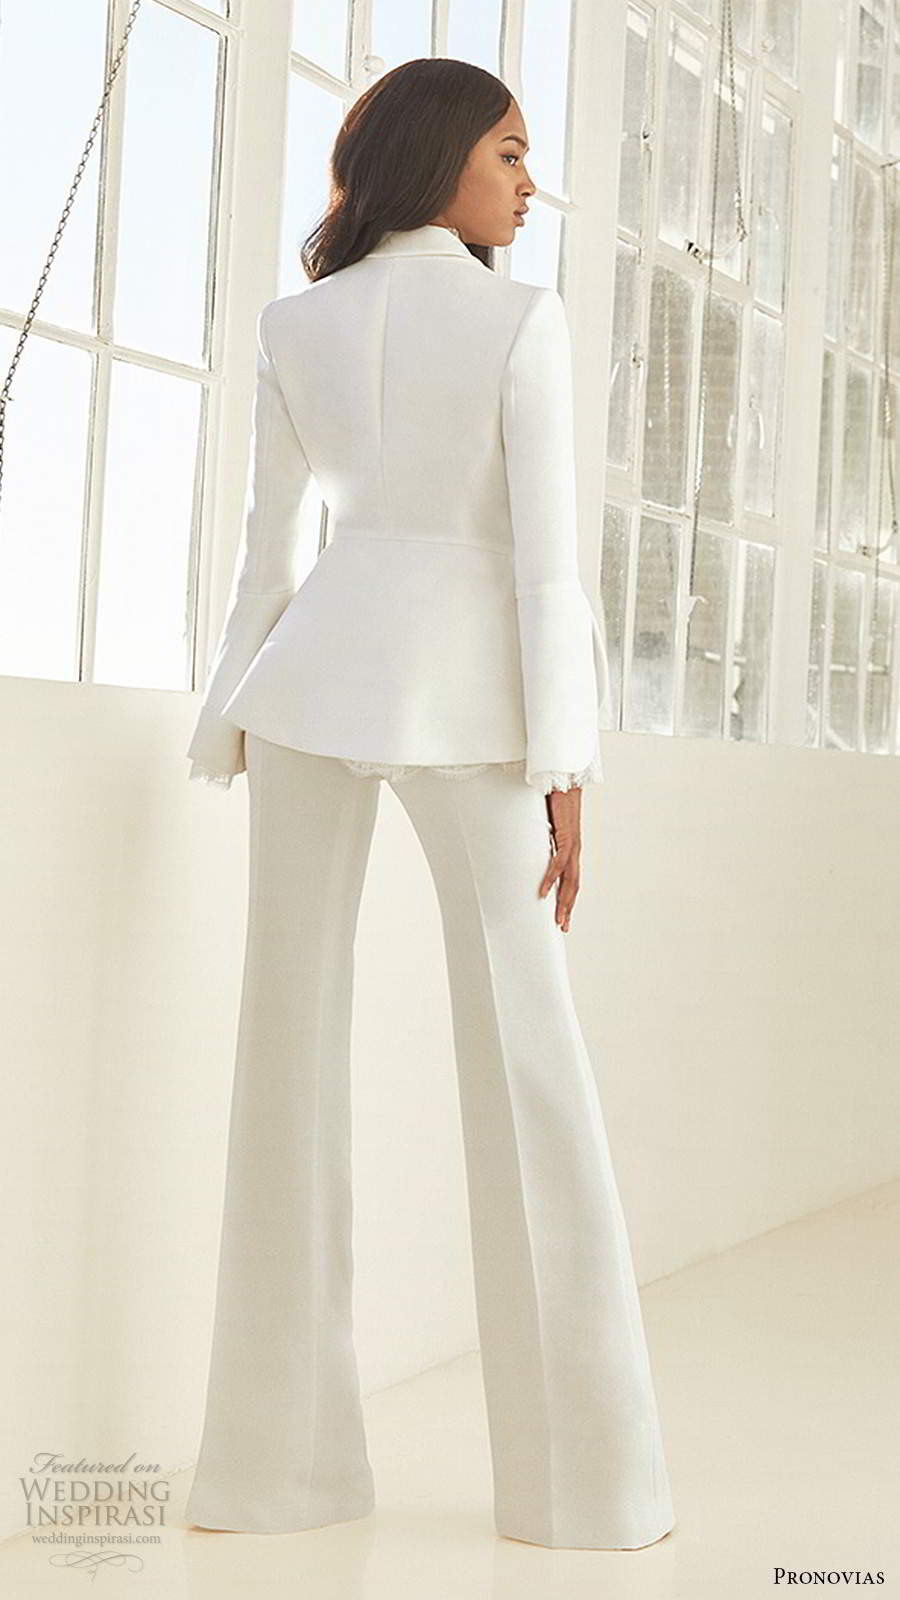 pronovias 2020 ashley graham x bridal long sleeves collar blazer jacket top peplum bodice pants suit wedding dress (16) bv